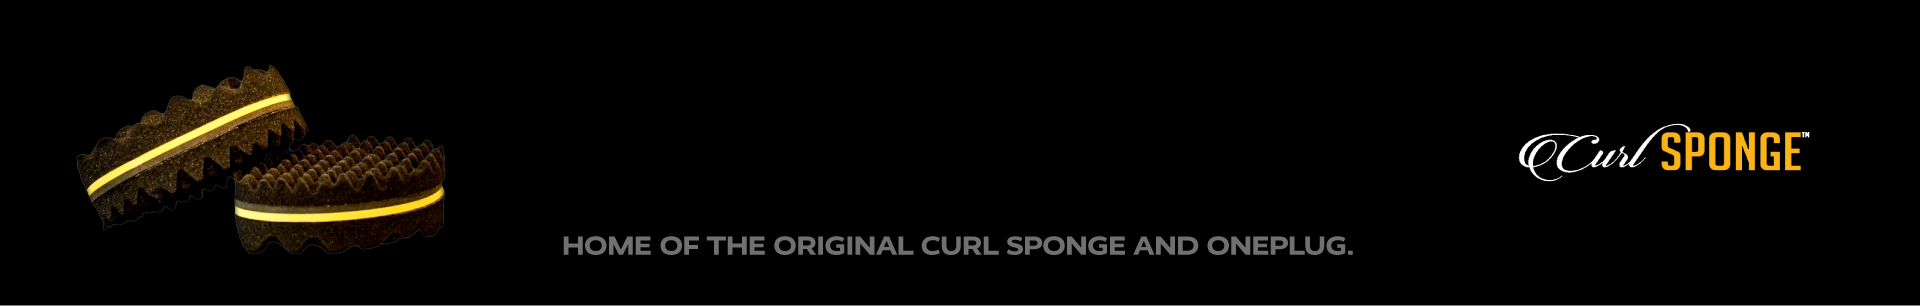 curlsponge